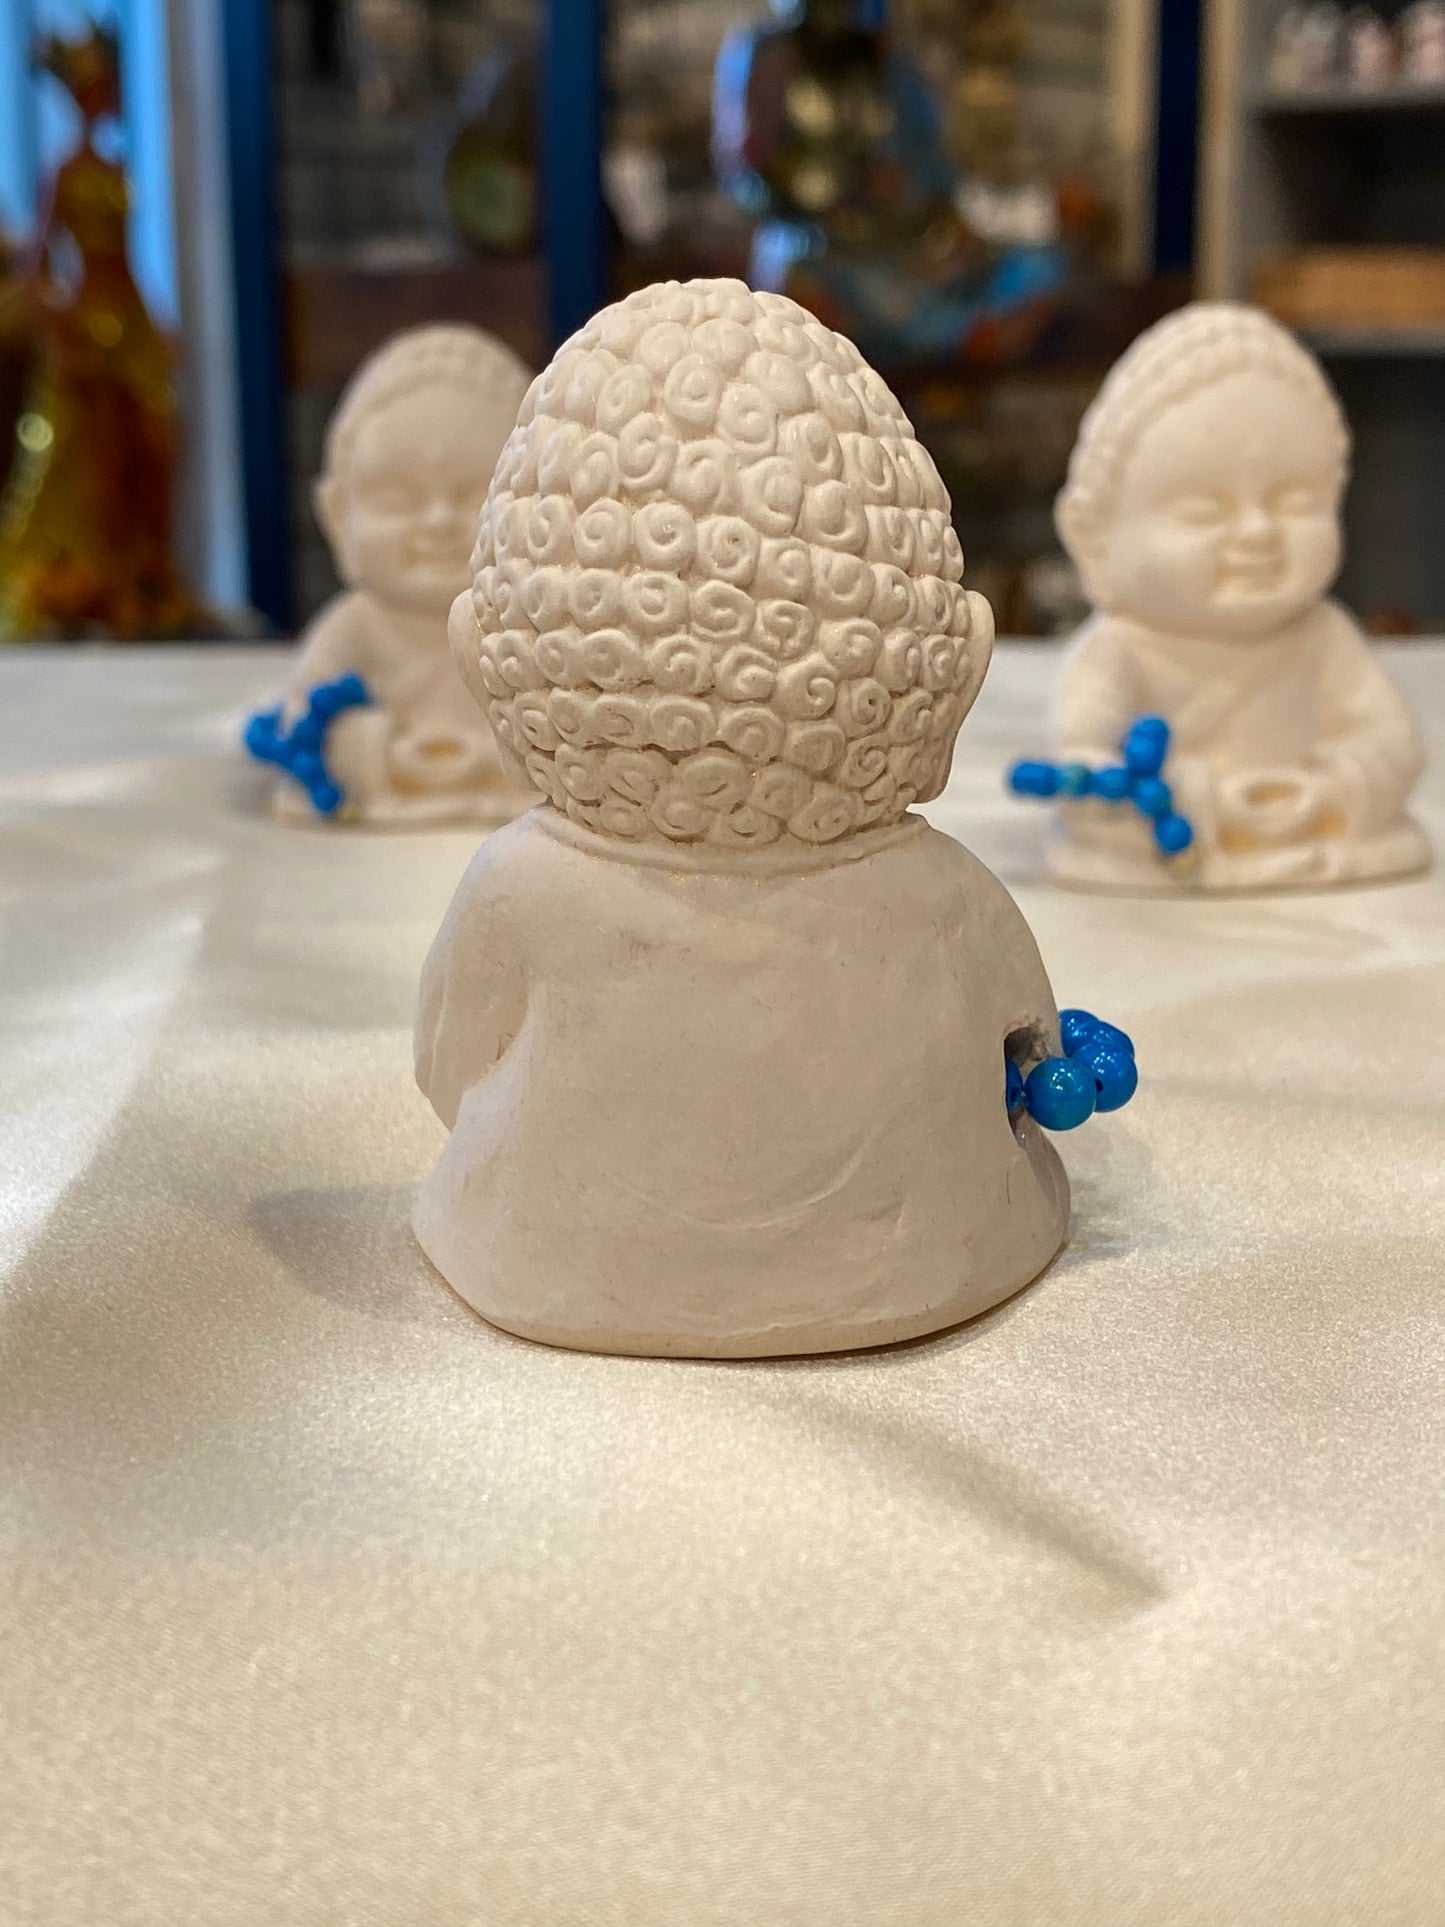 Ivory Miniature Meditation Buddha holding Bead